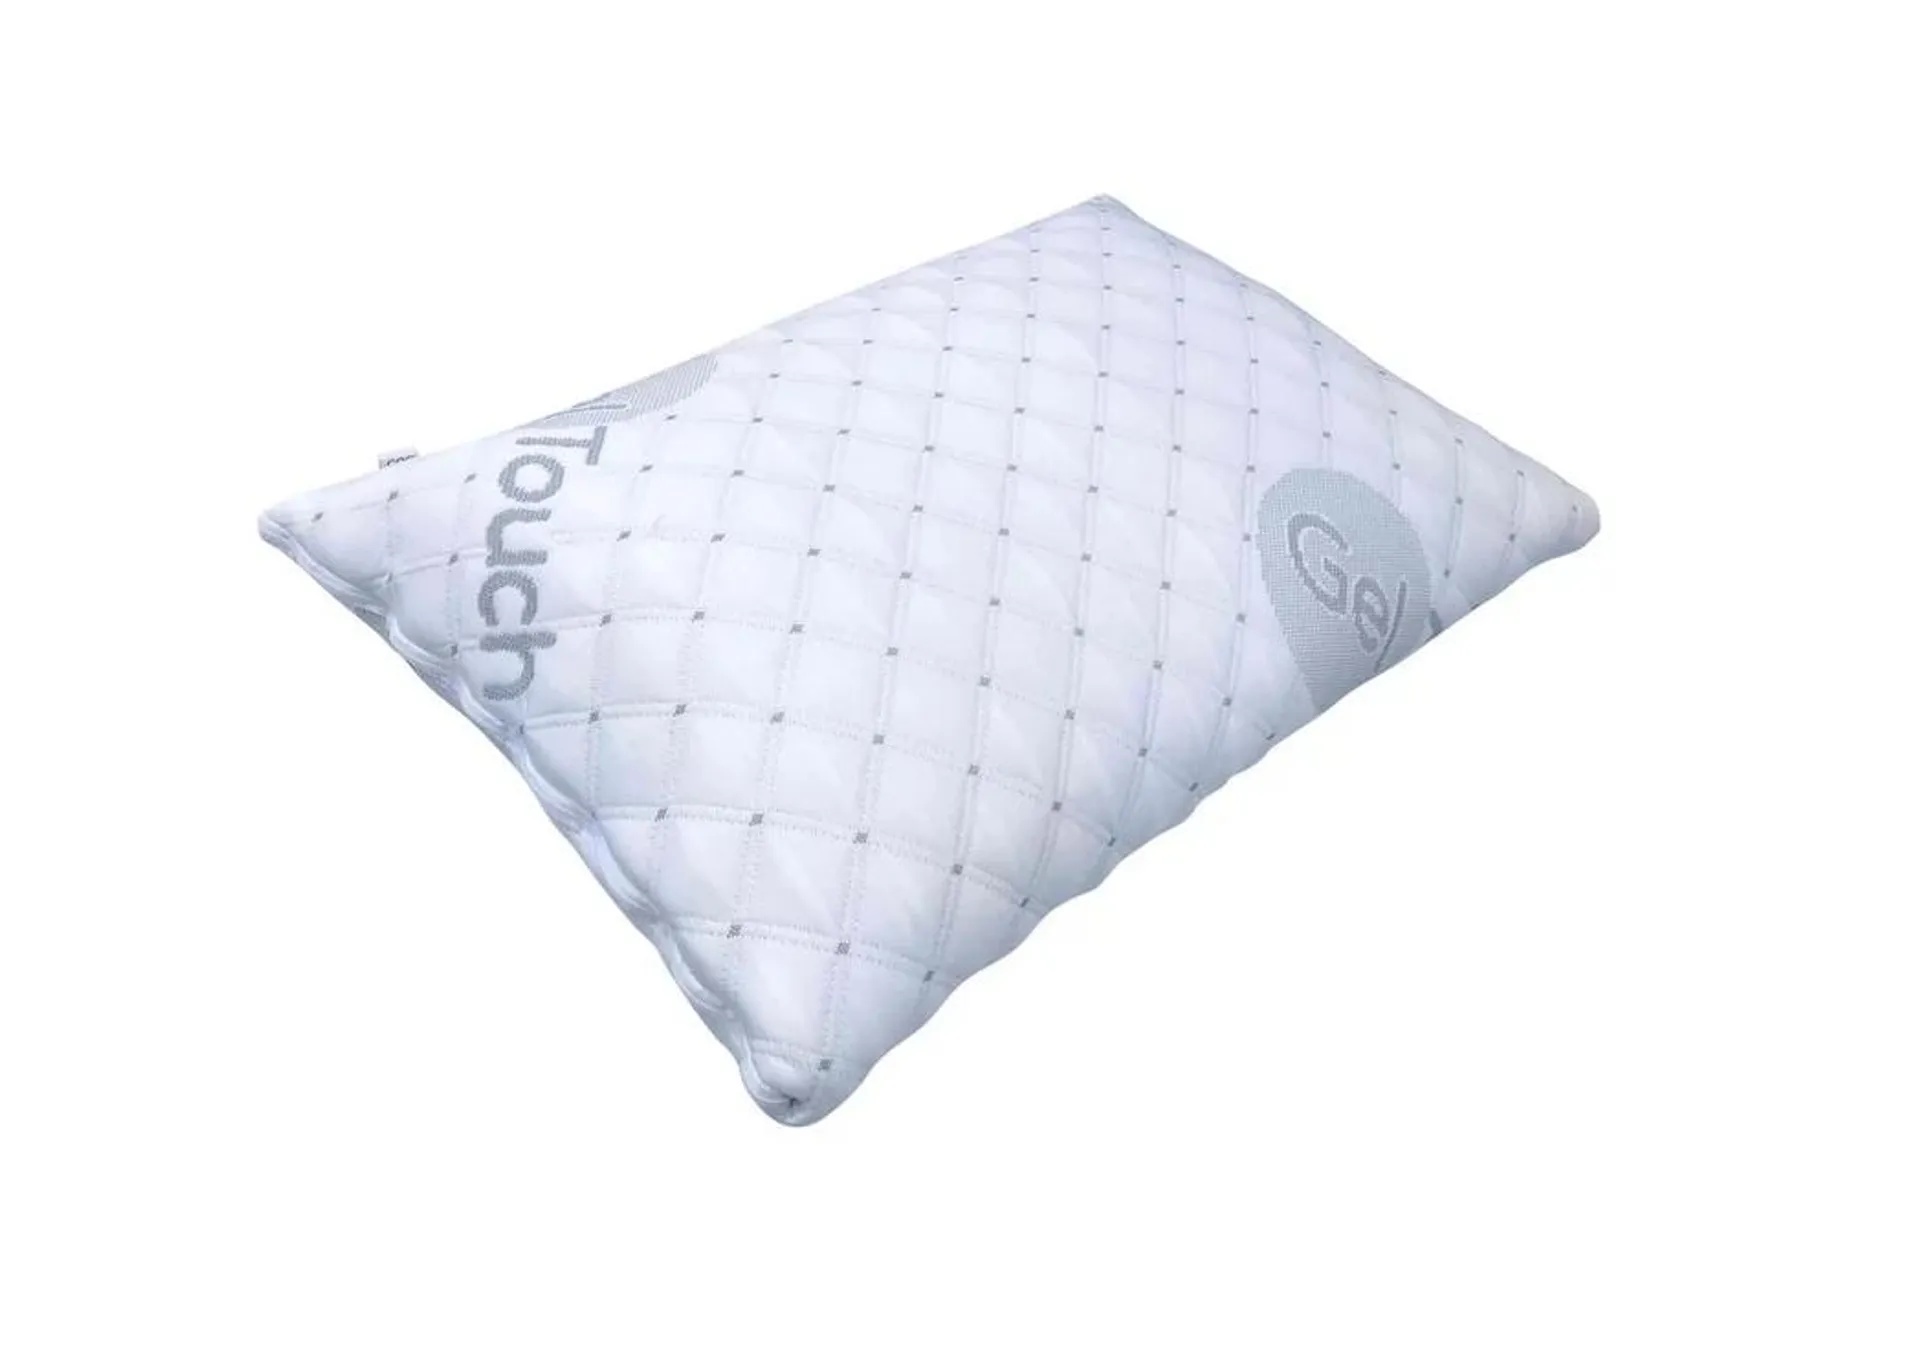 Geltouch Cool Pillow